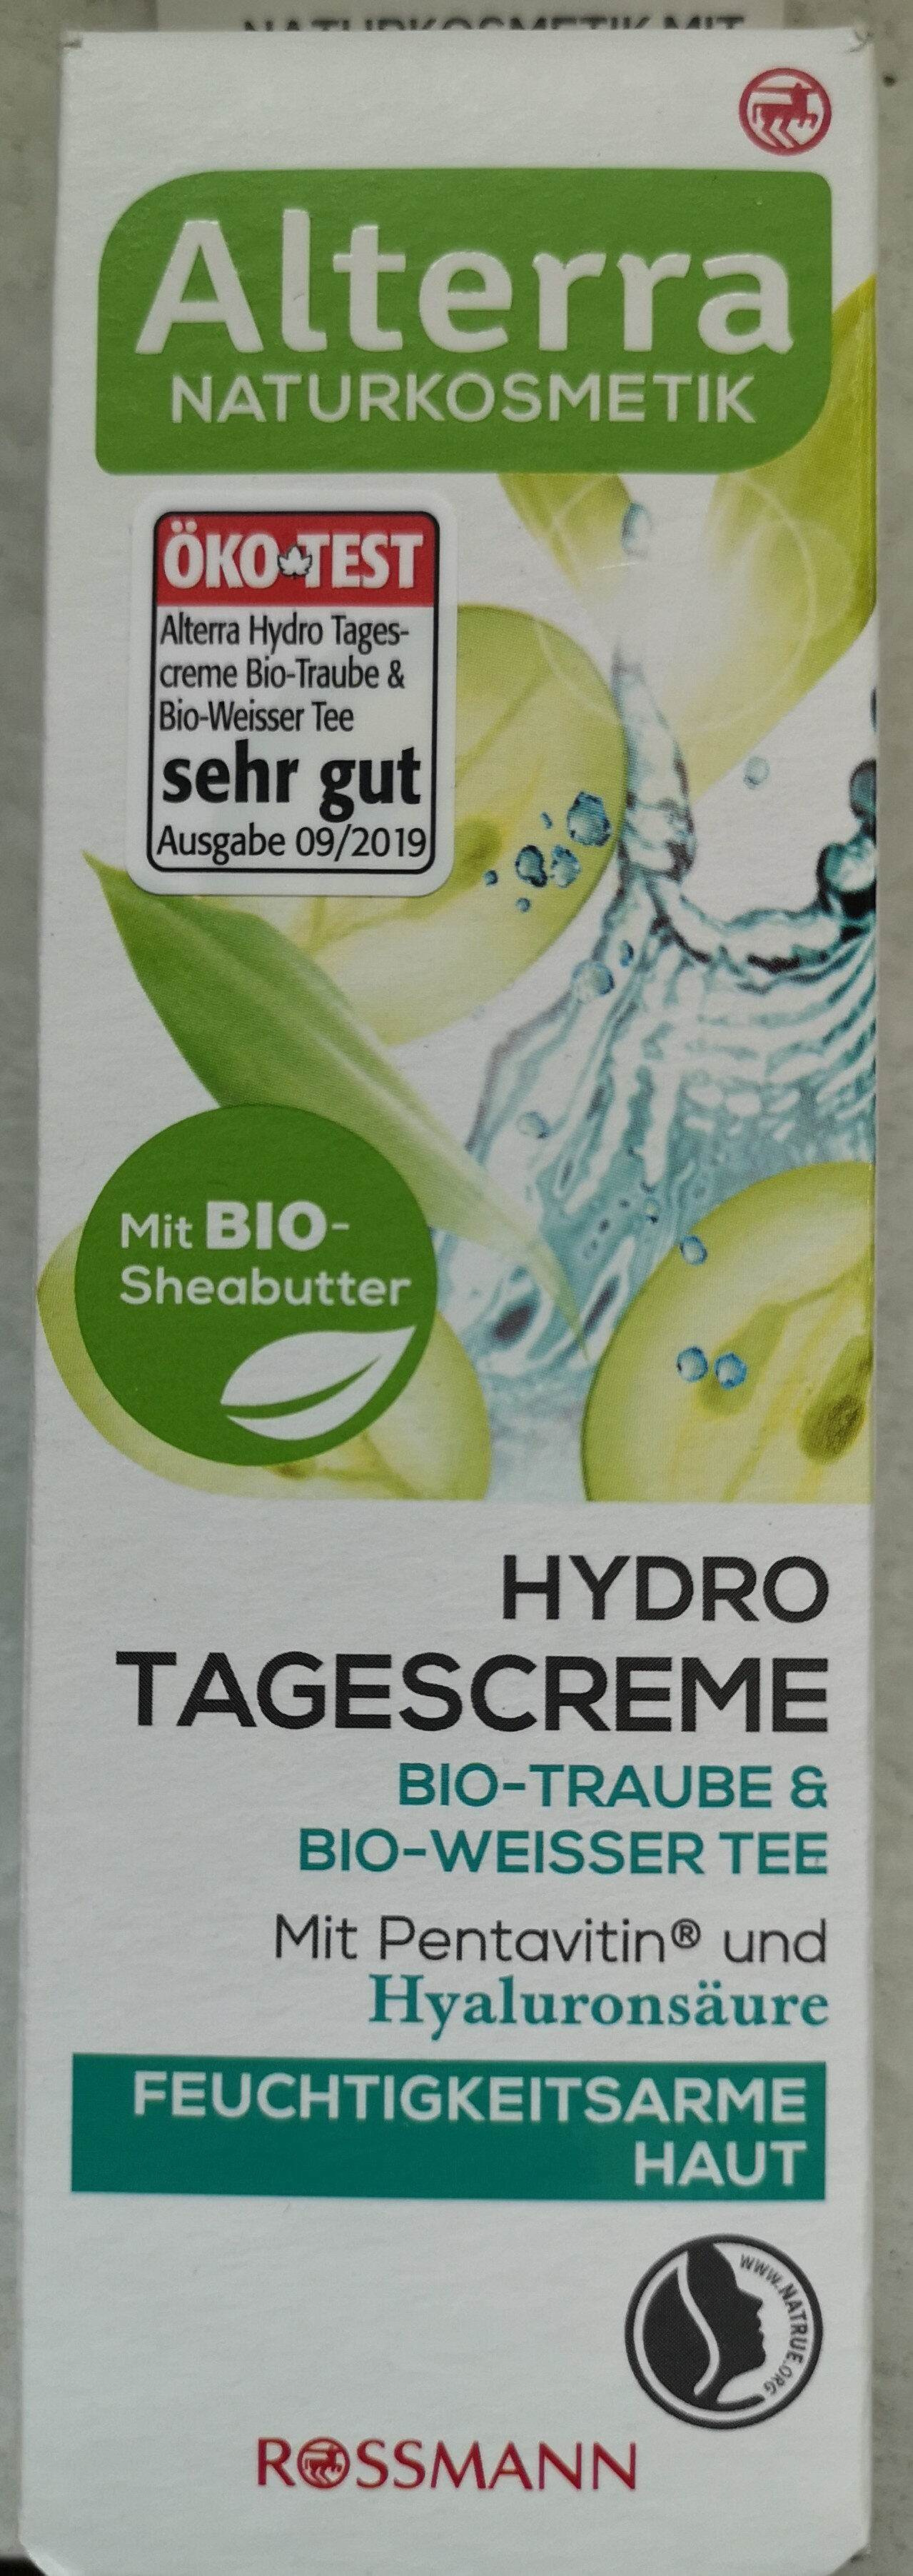 Hydro Tagescreme Bio-Traube & Bio-Weisser Tee - Produto - de